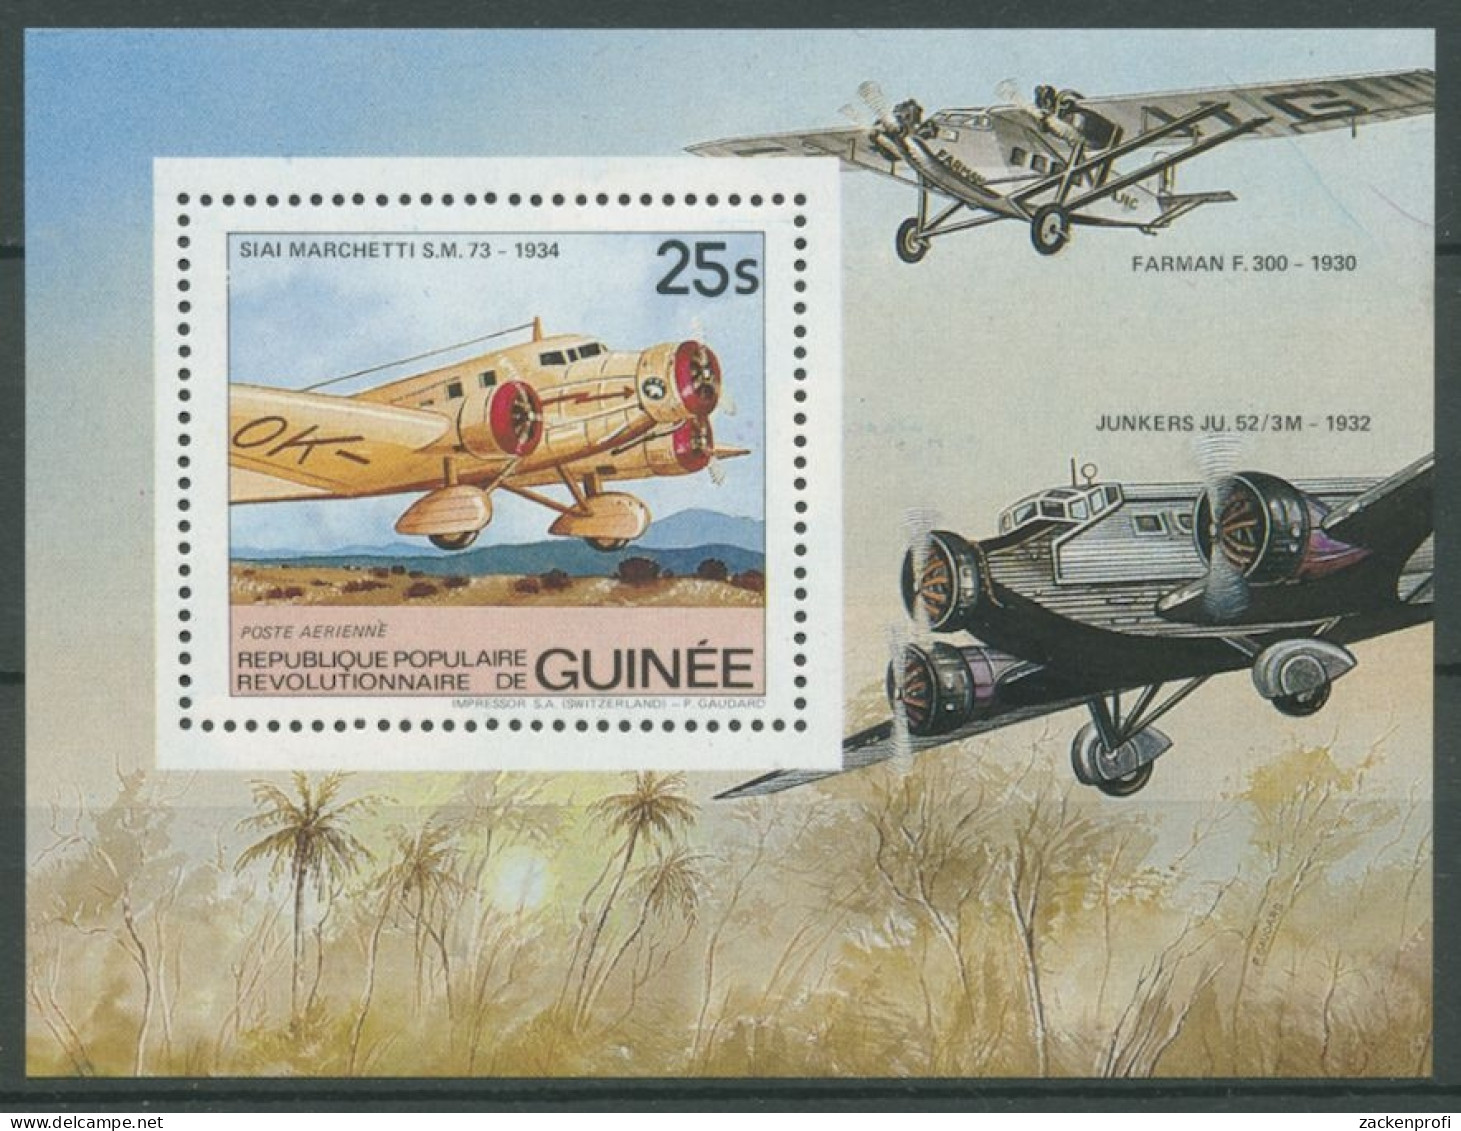 Guinea 1984 Verkehrsmittel Flugzeug Marcetti Block 95 A Postfrisch (C28228) - Guinea (1958-...)